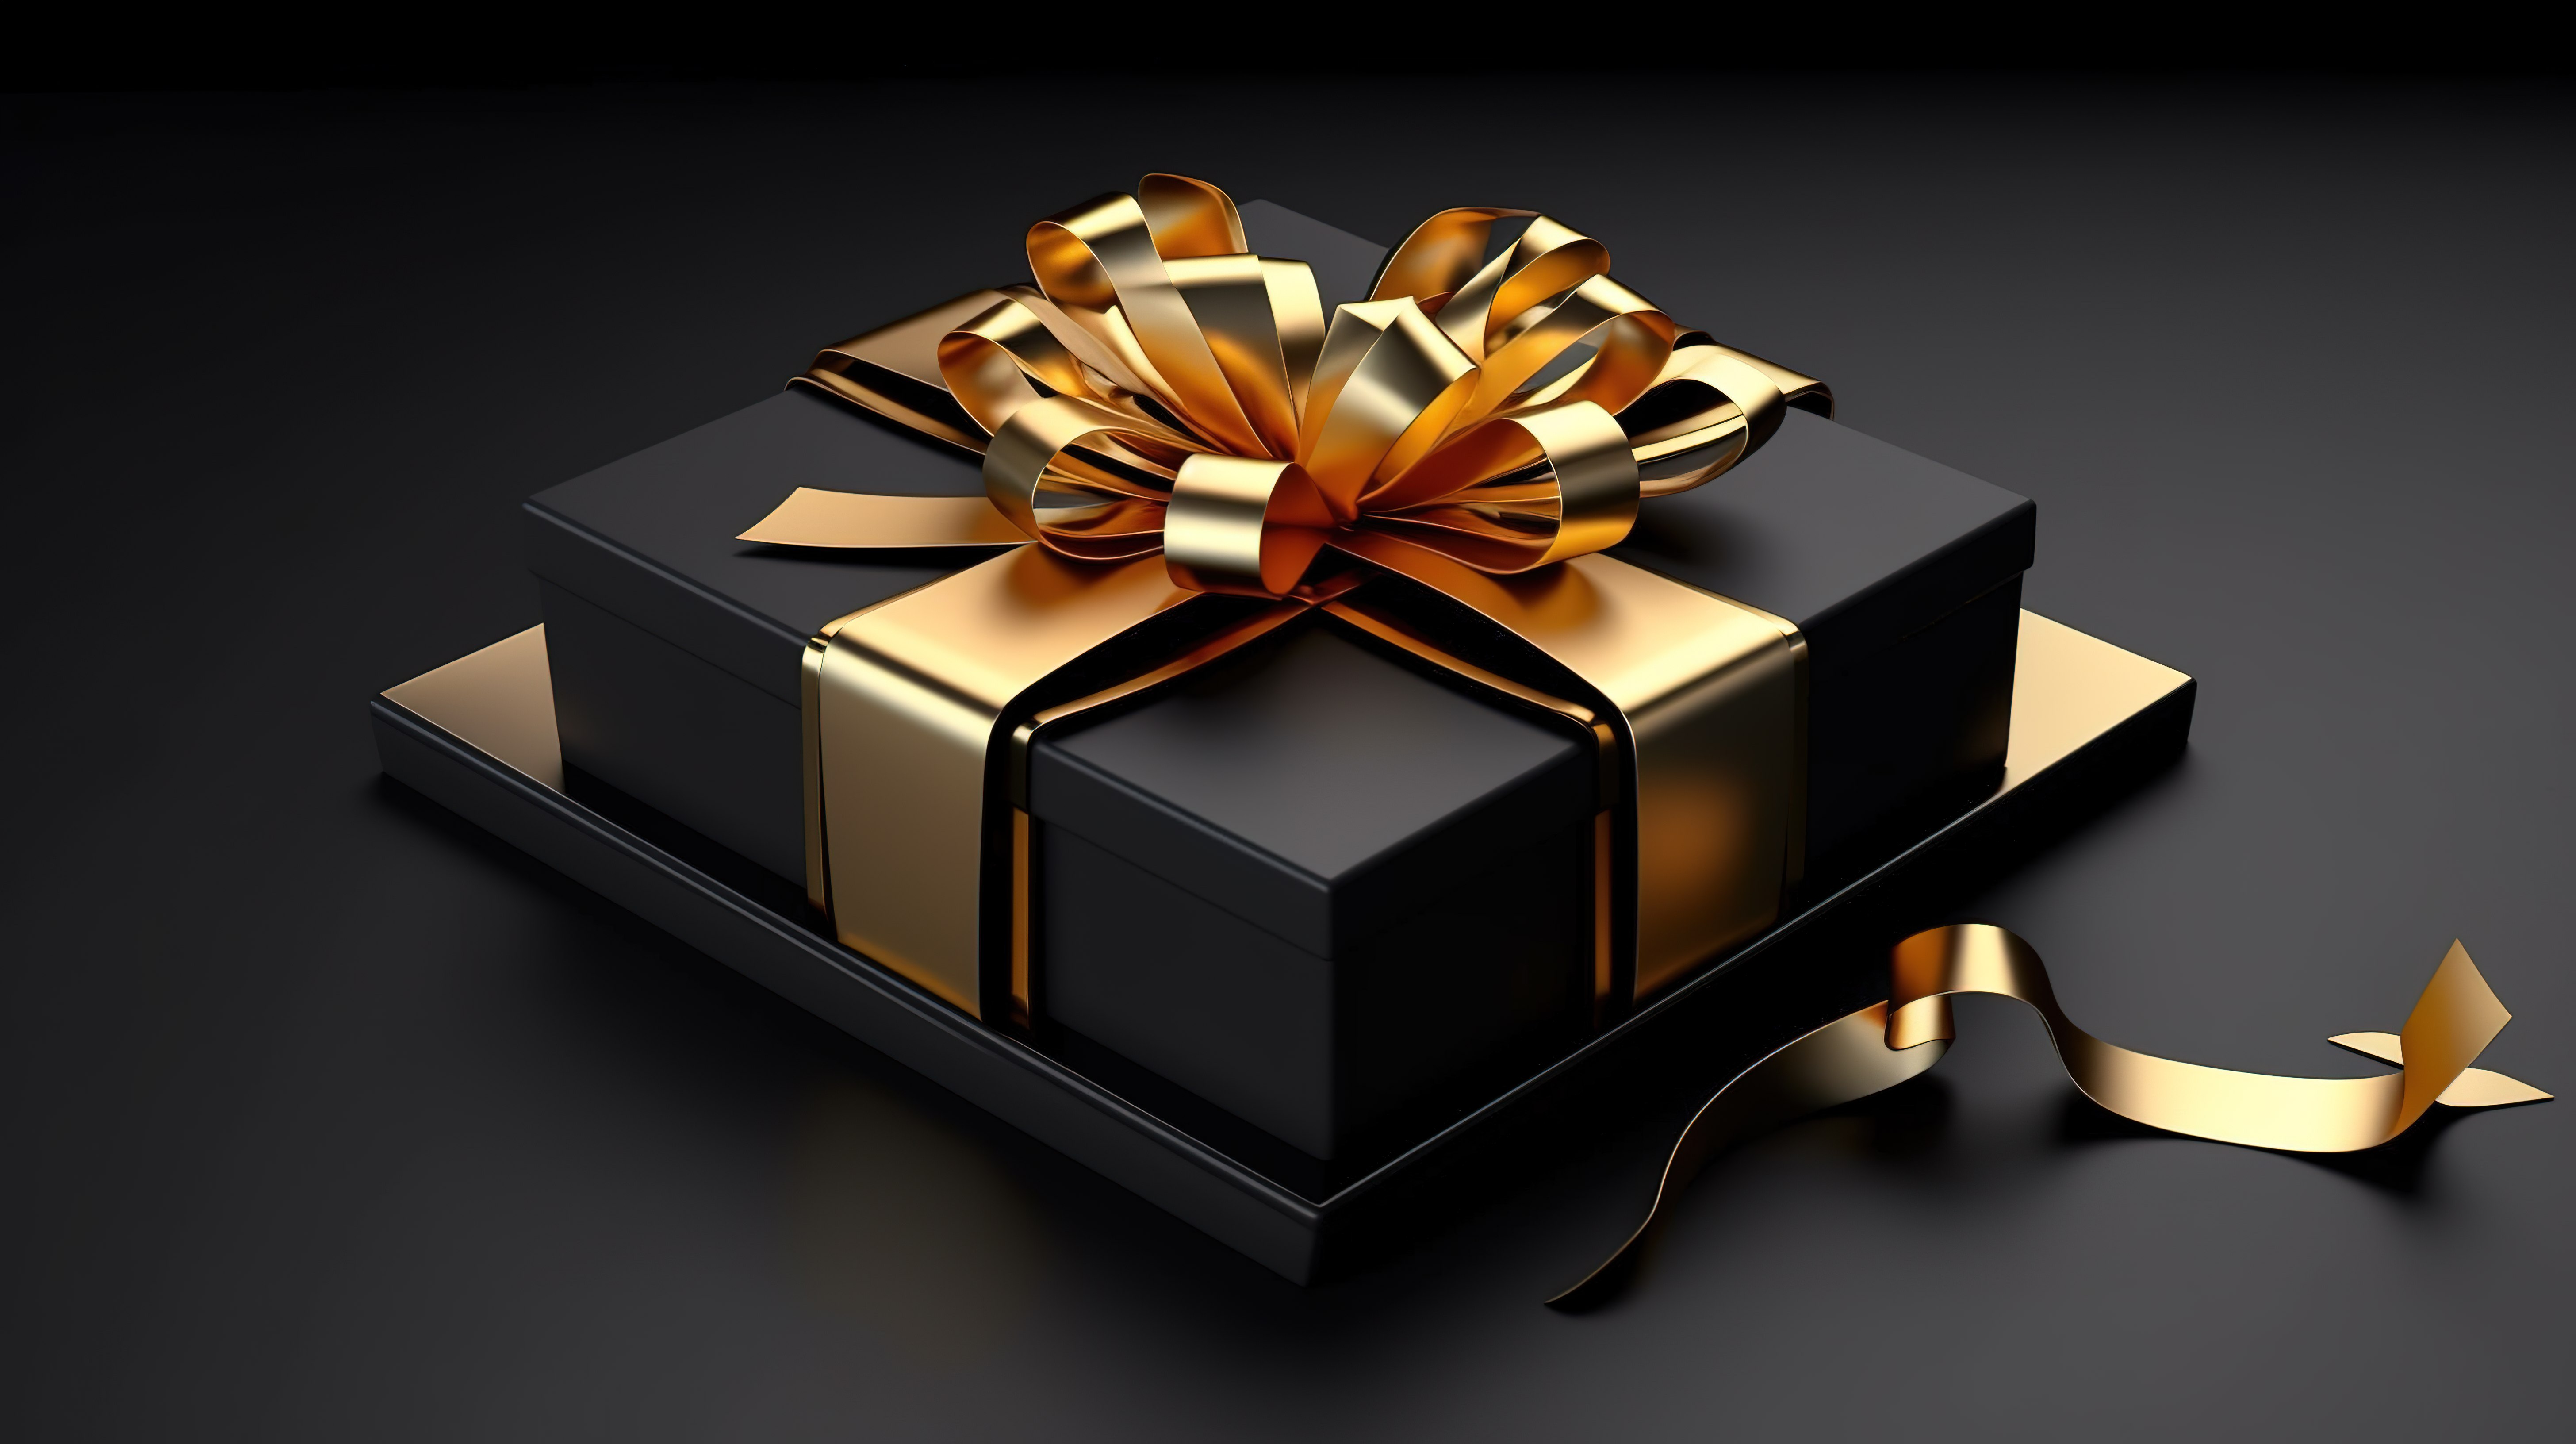 3D 渲染打开礼品盒的插图，带有金色丝带弓，用于黑色星期五销售概念图片